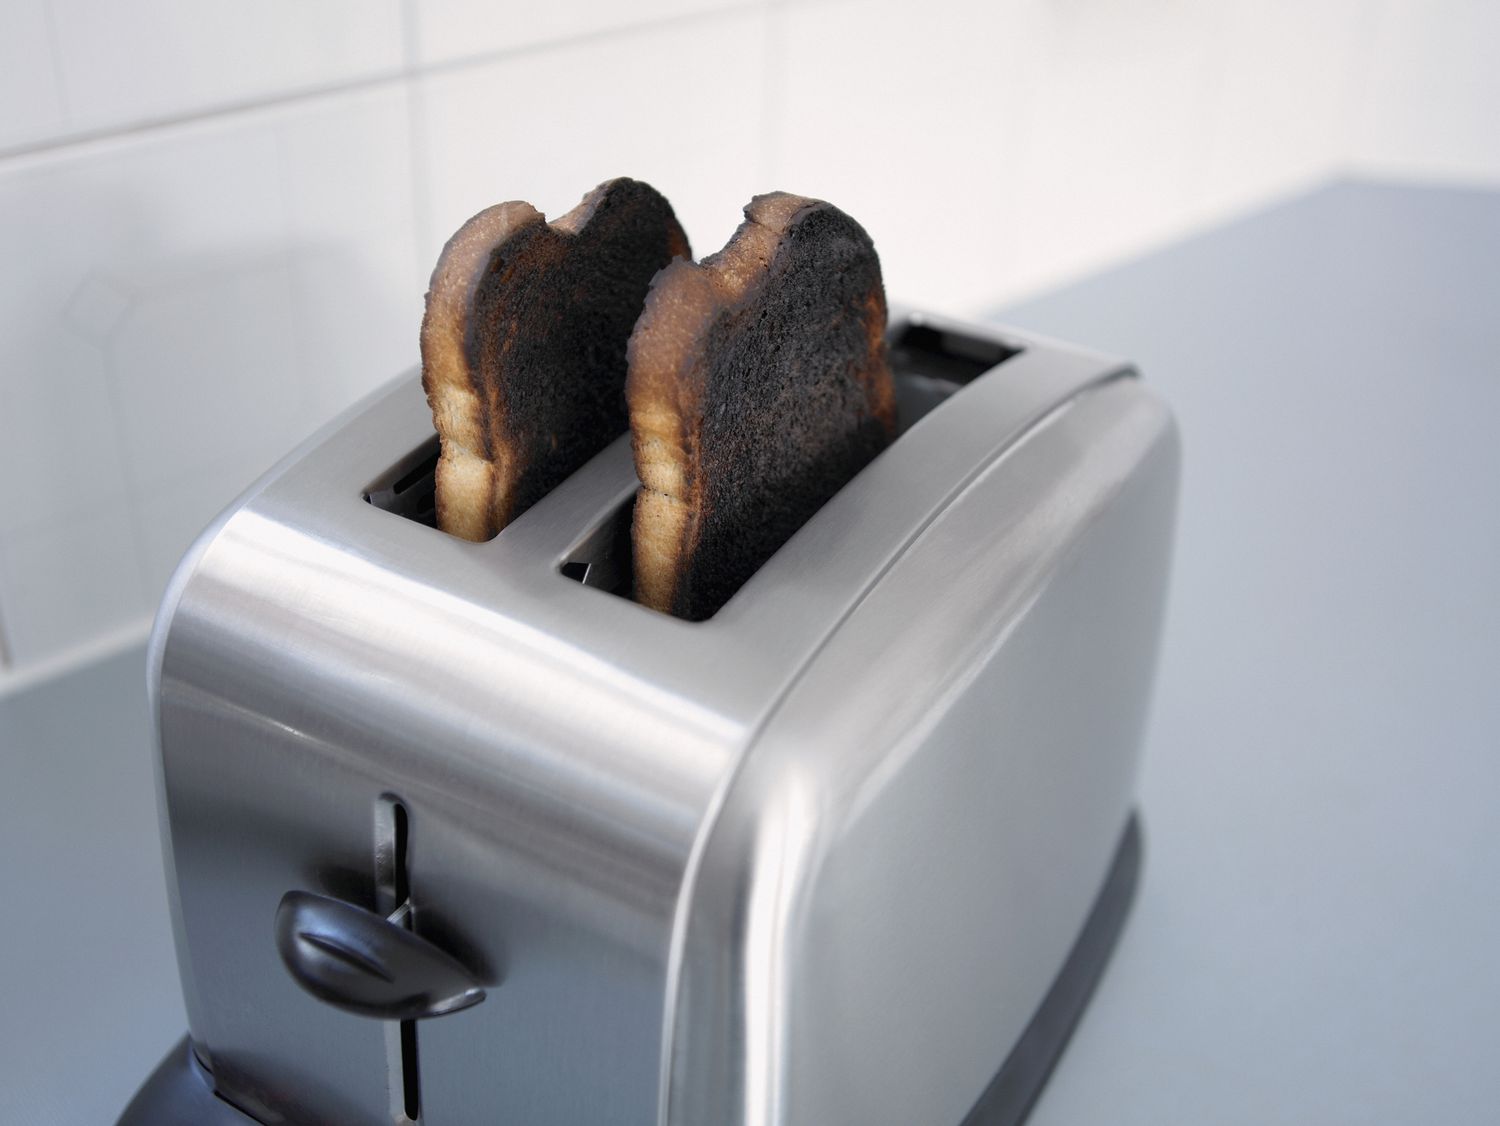 Verbrannter Toast im Toaster